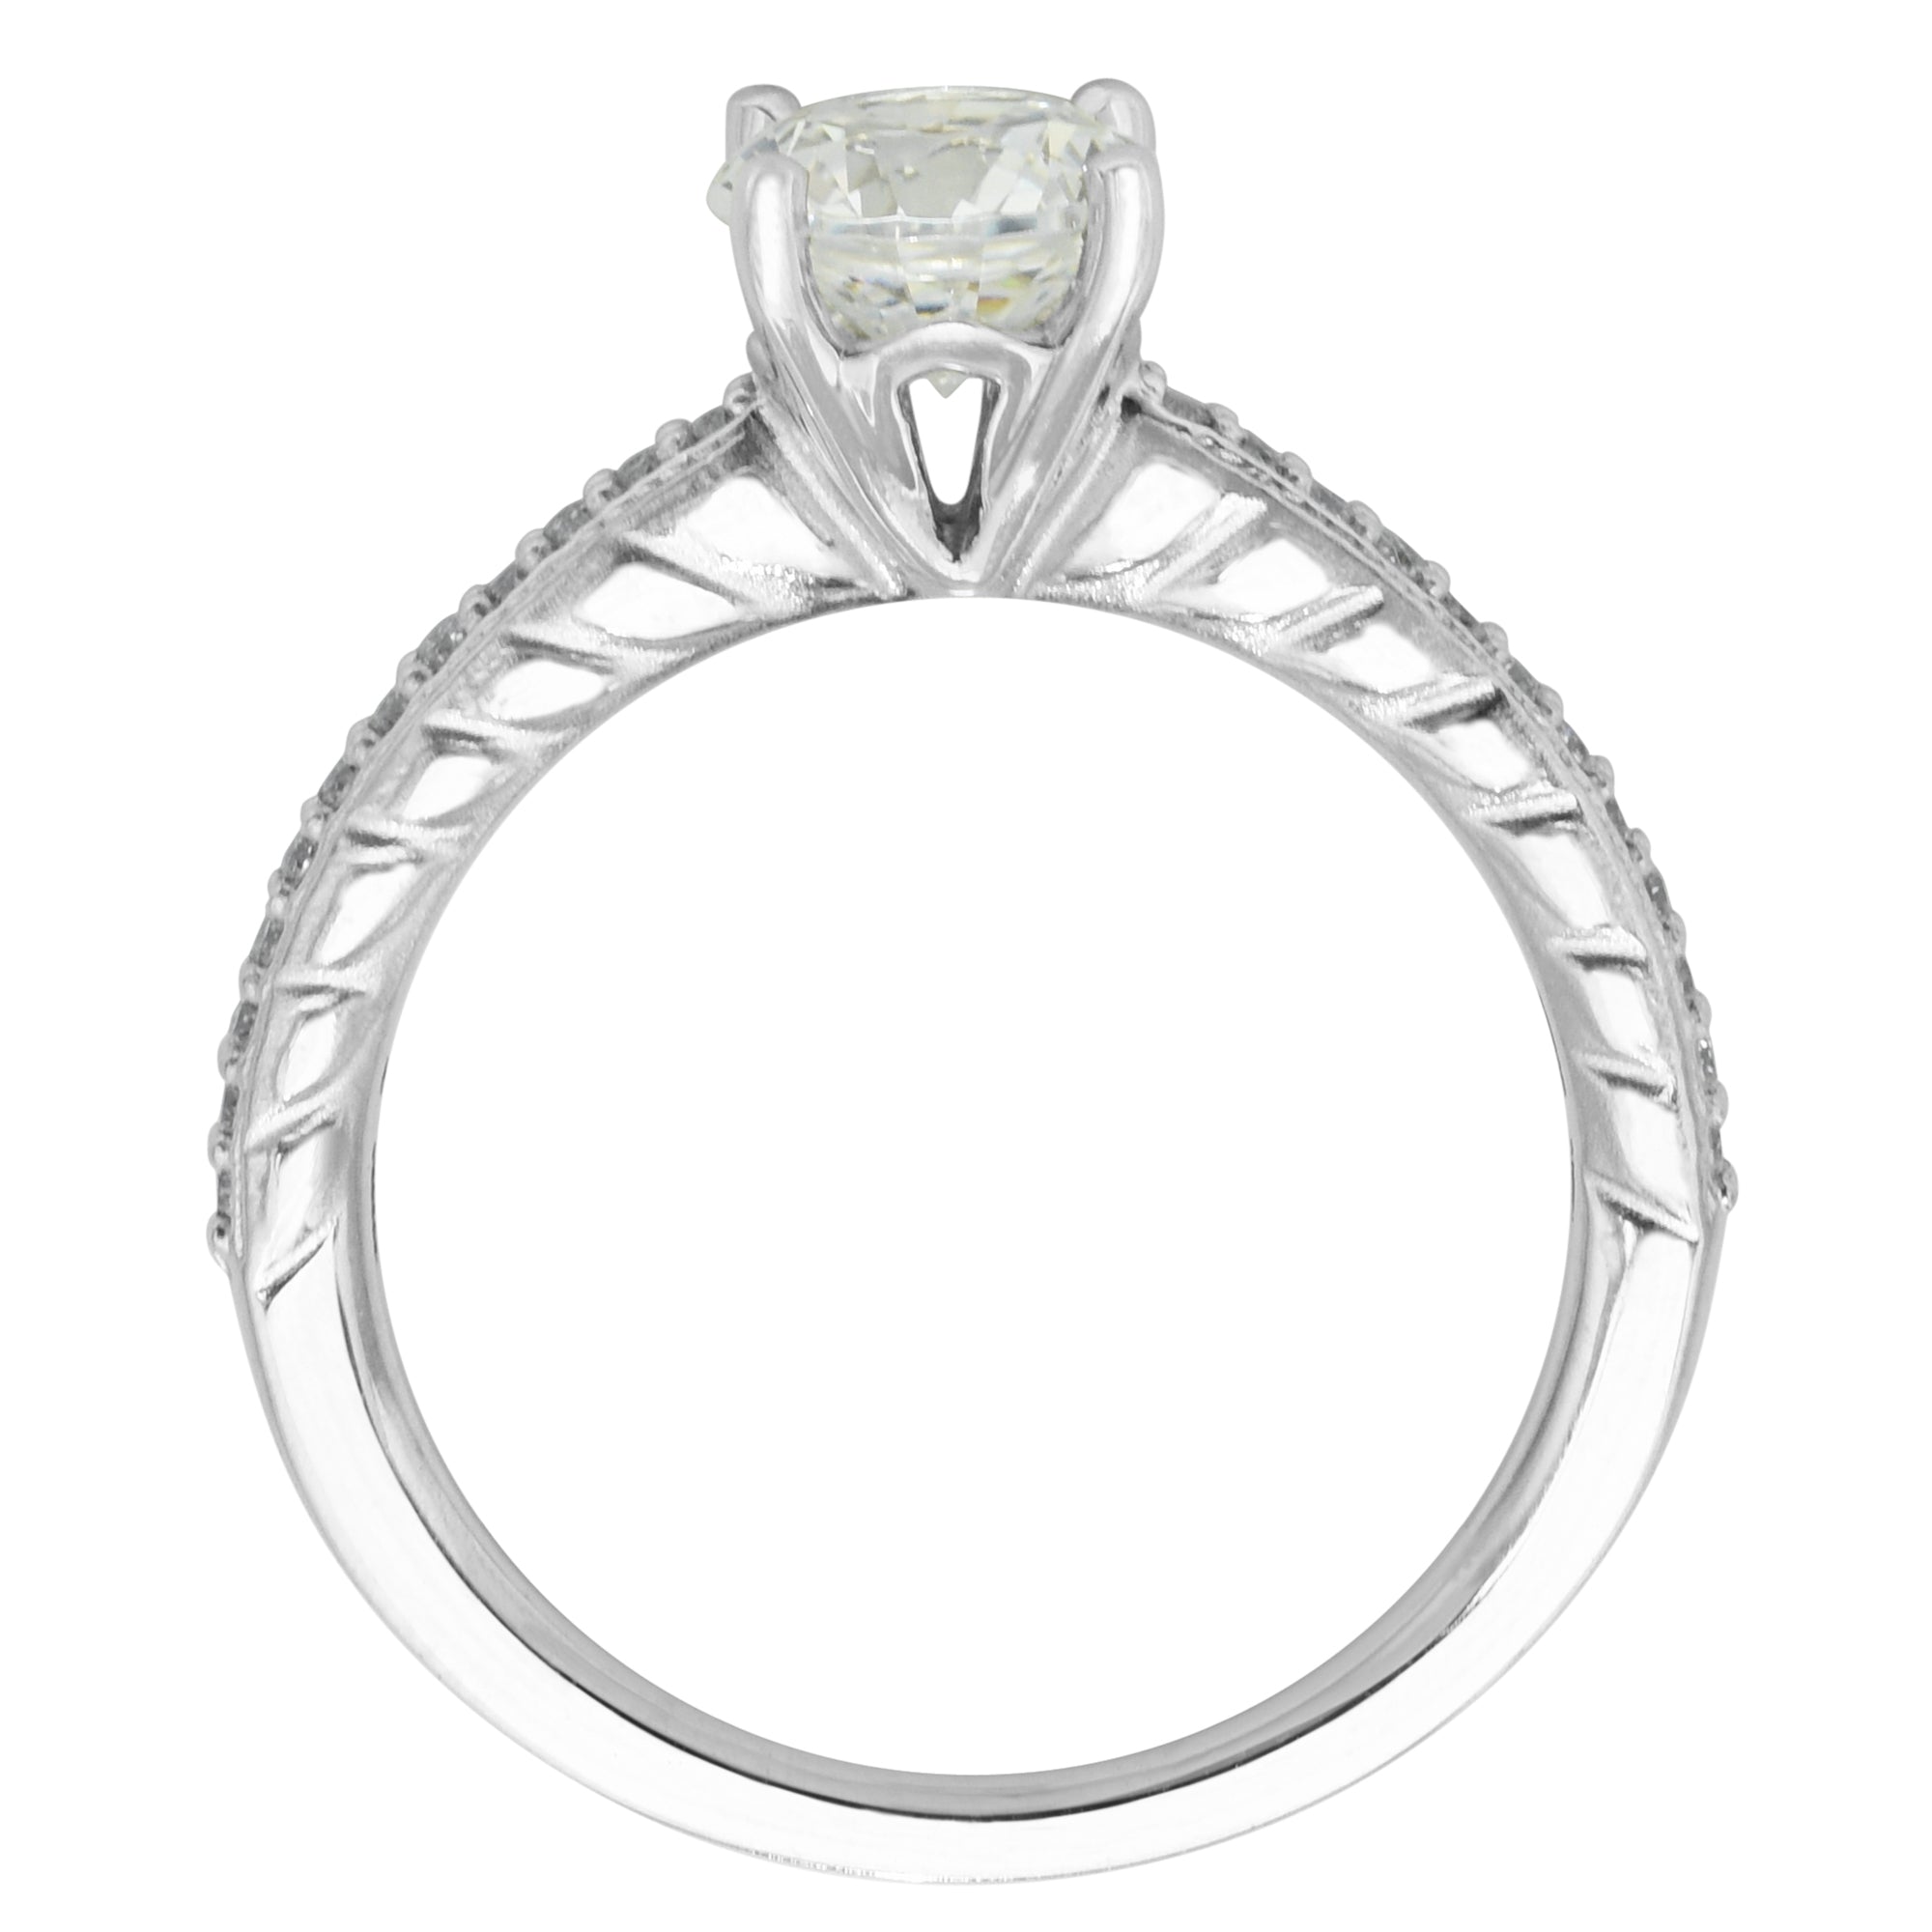 Ritani Engraved Diamond Engagement Ring Setting in 14kt White Gold (1/7ct tw)